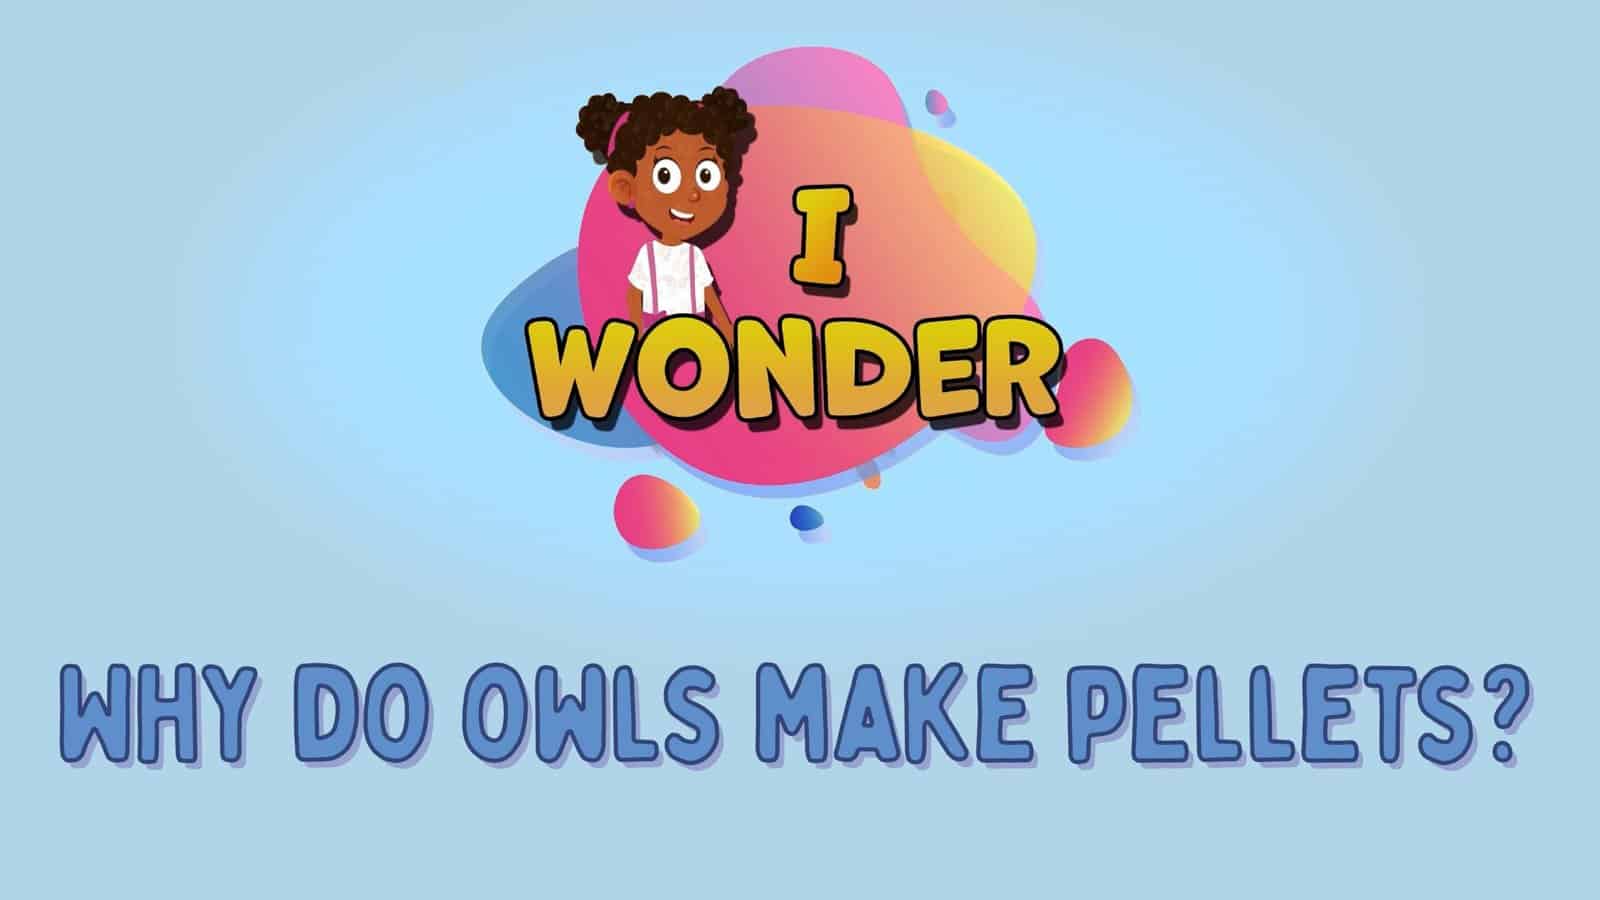 Why Do Owls Make Pellets?